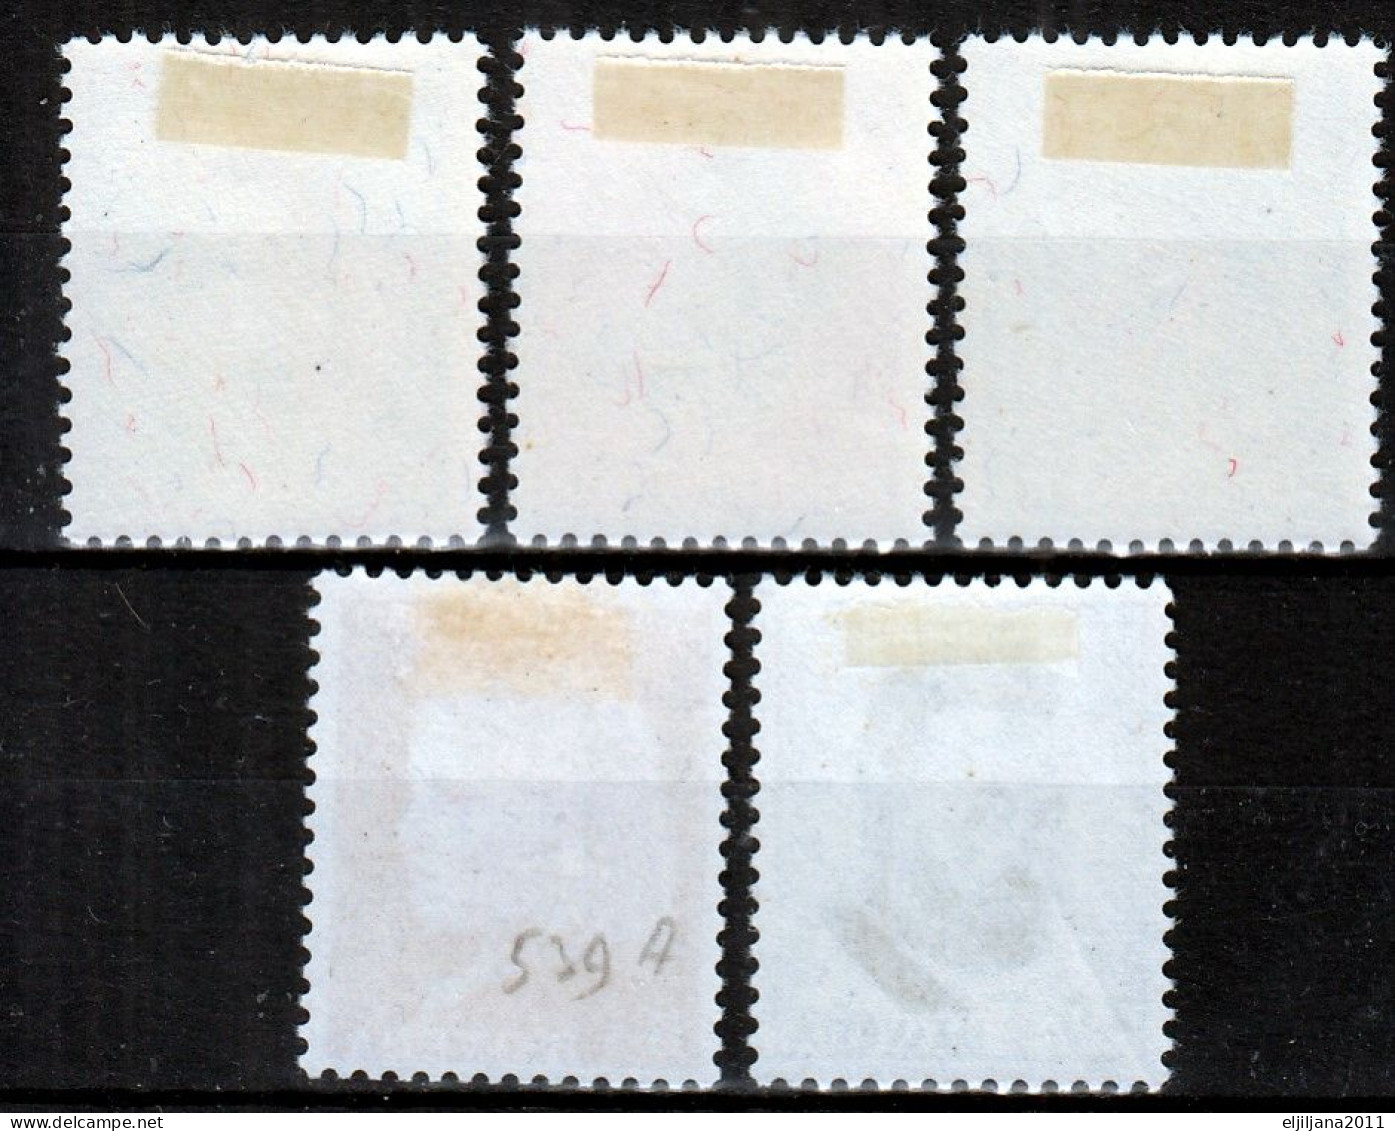 Switzerland / Helvetia / Schweiz / Suisse 1953 ⁕ Pro Juventute Mi.588-592 ⁕ 5v MH - Unused Stamps